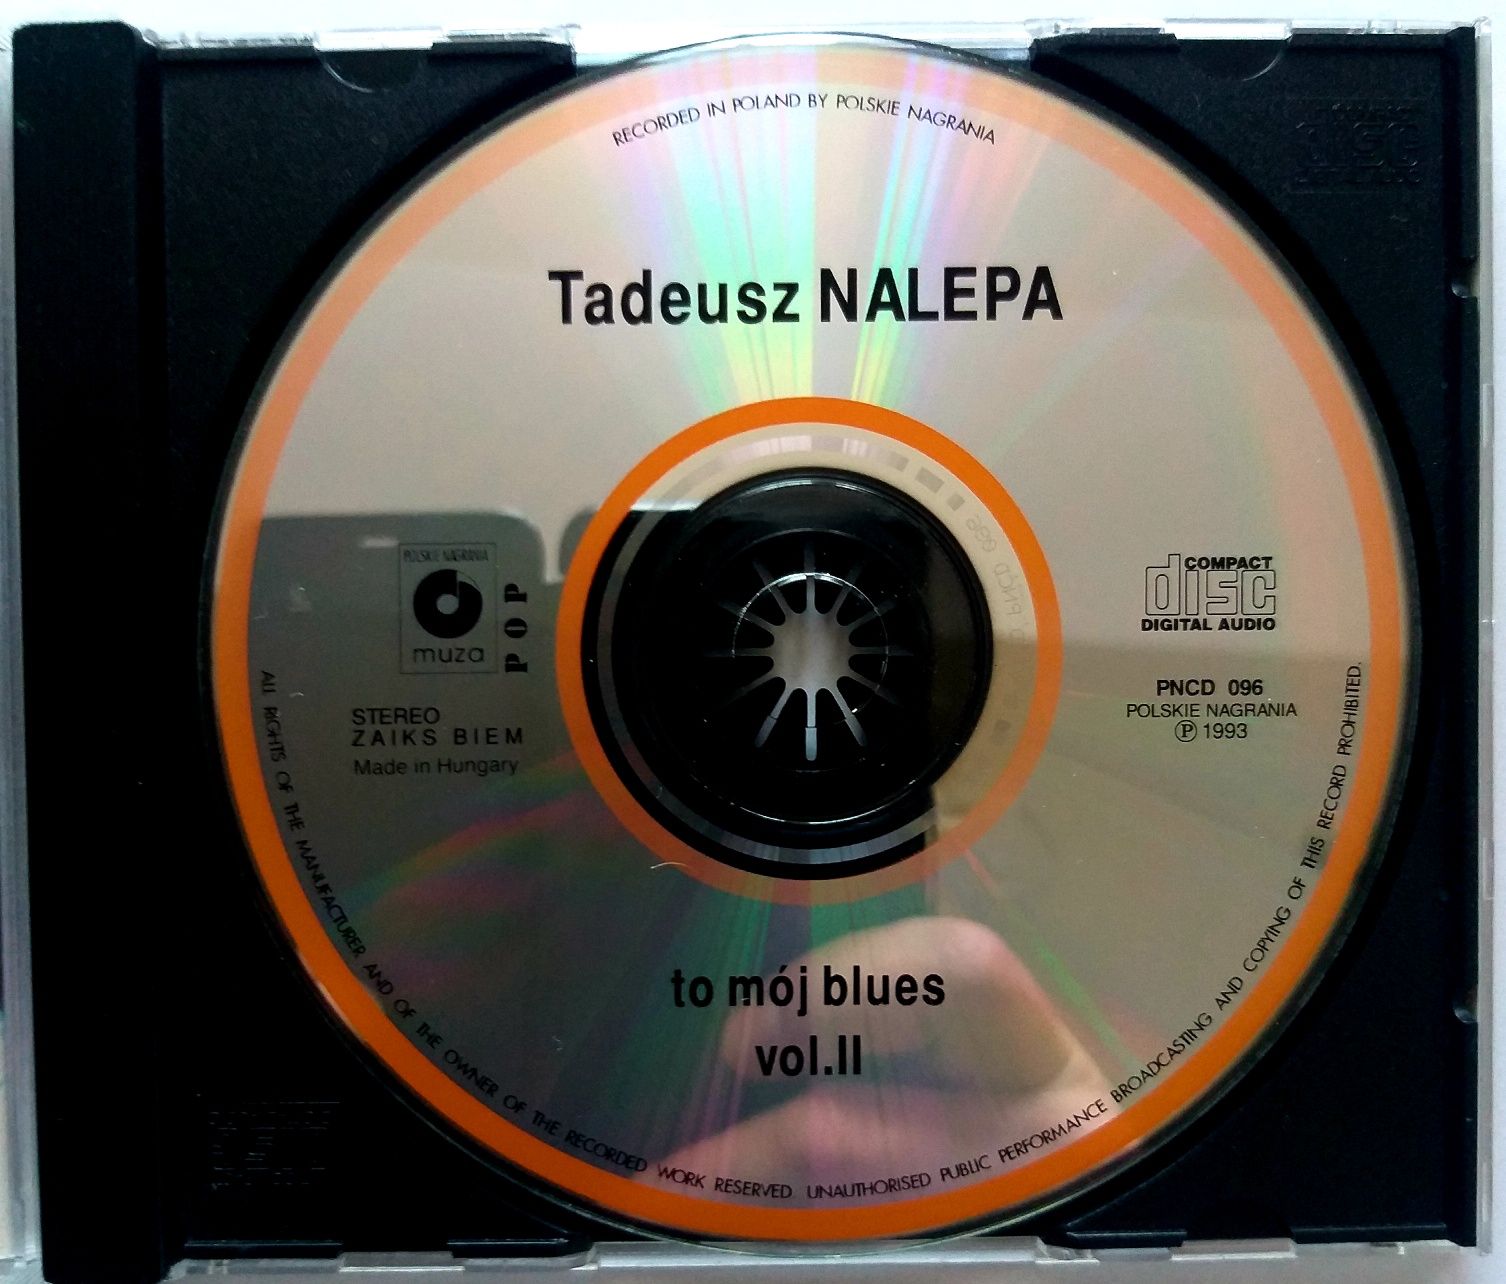 Tadeusz Nalepa To Mój Blues vol.2 1991r